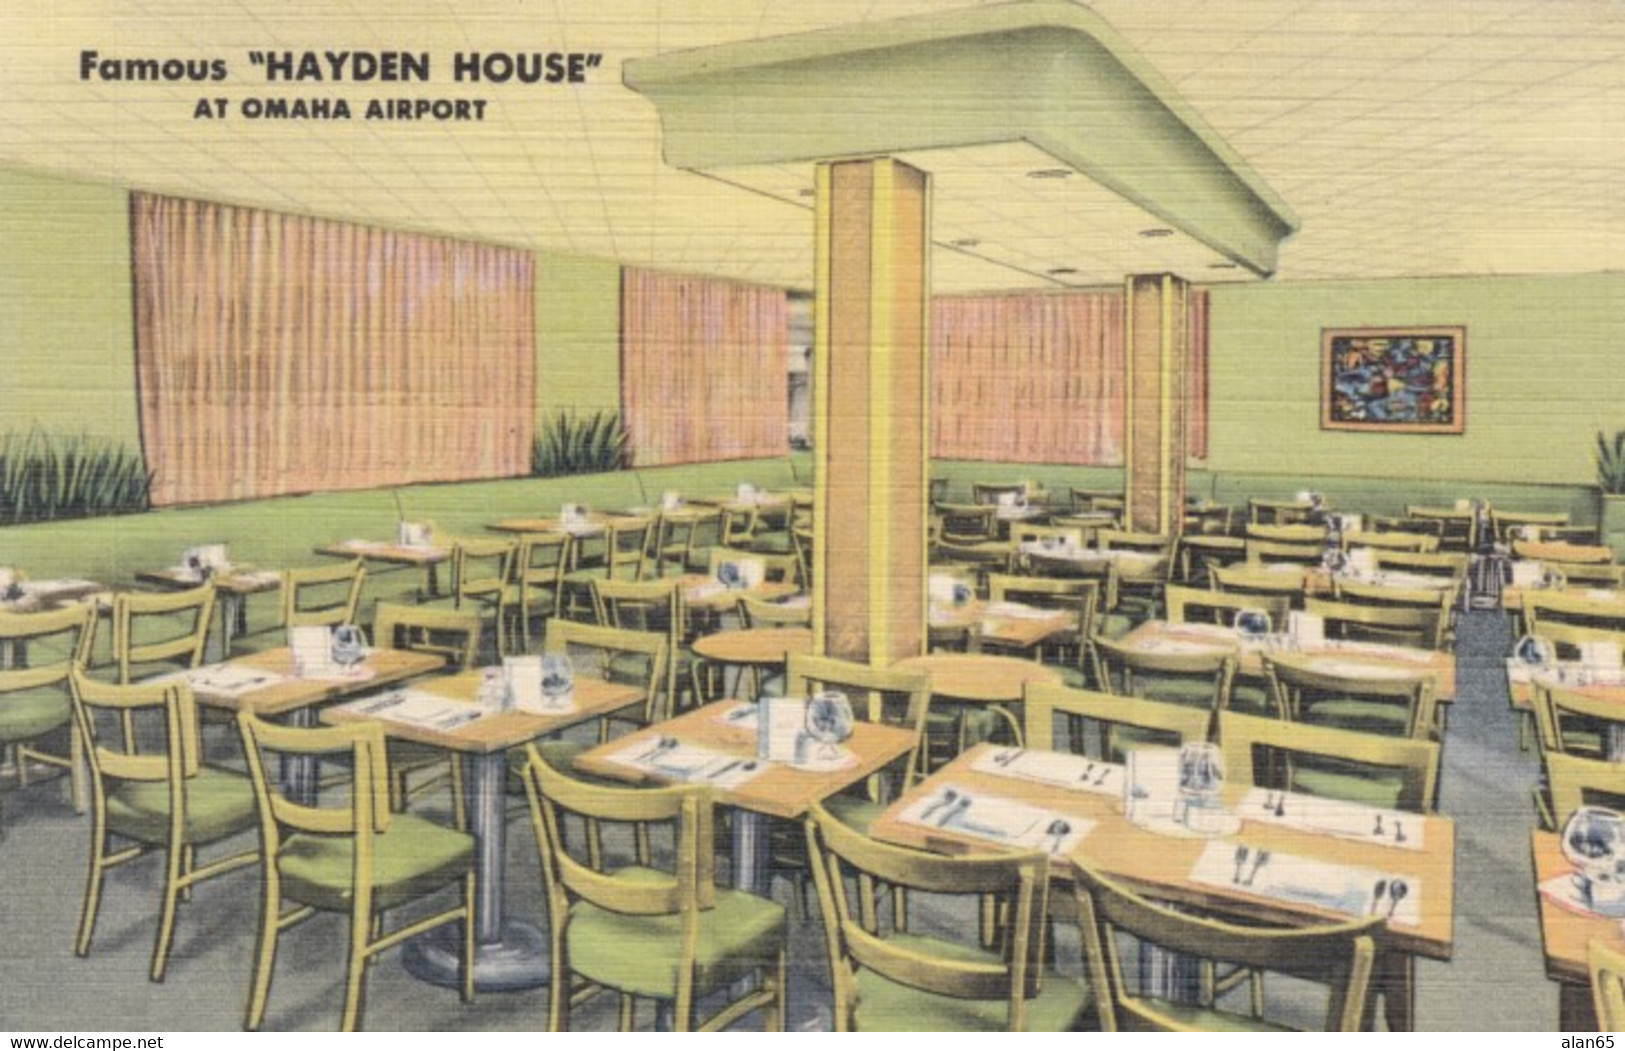 Omaha Nebraska, Hayden House Restaurant Interior View, Airport Facility, C1940s Vintage Curteich Linen Postcard - Omaha